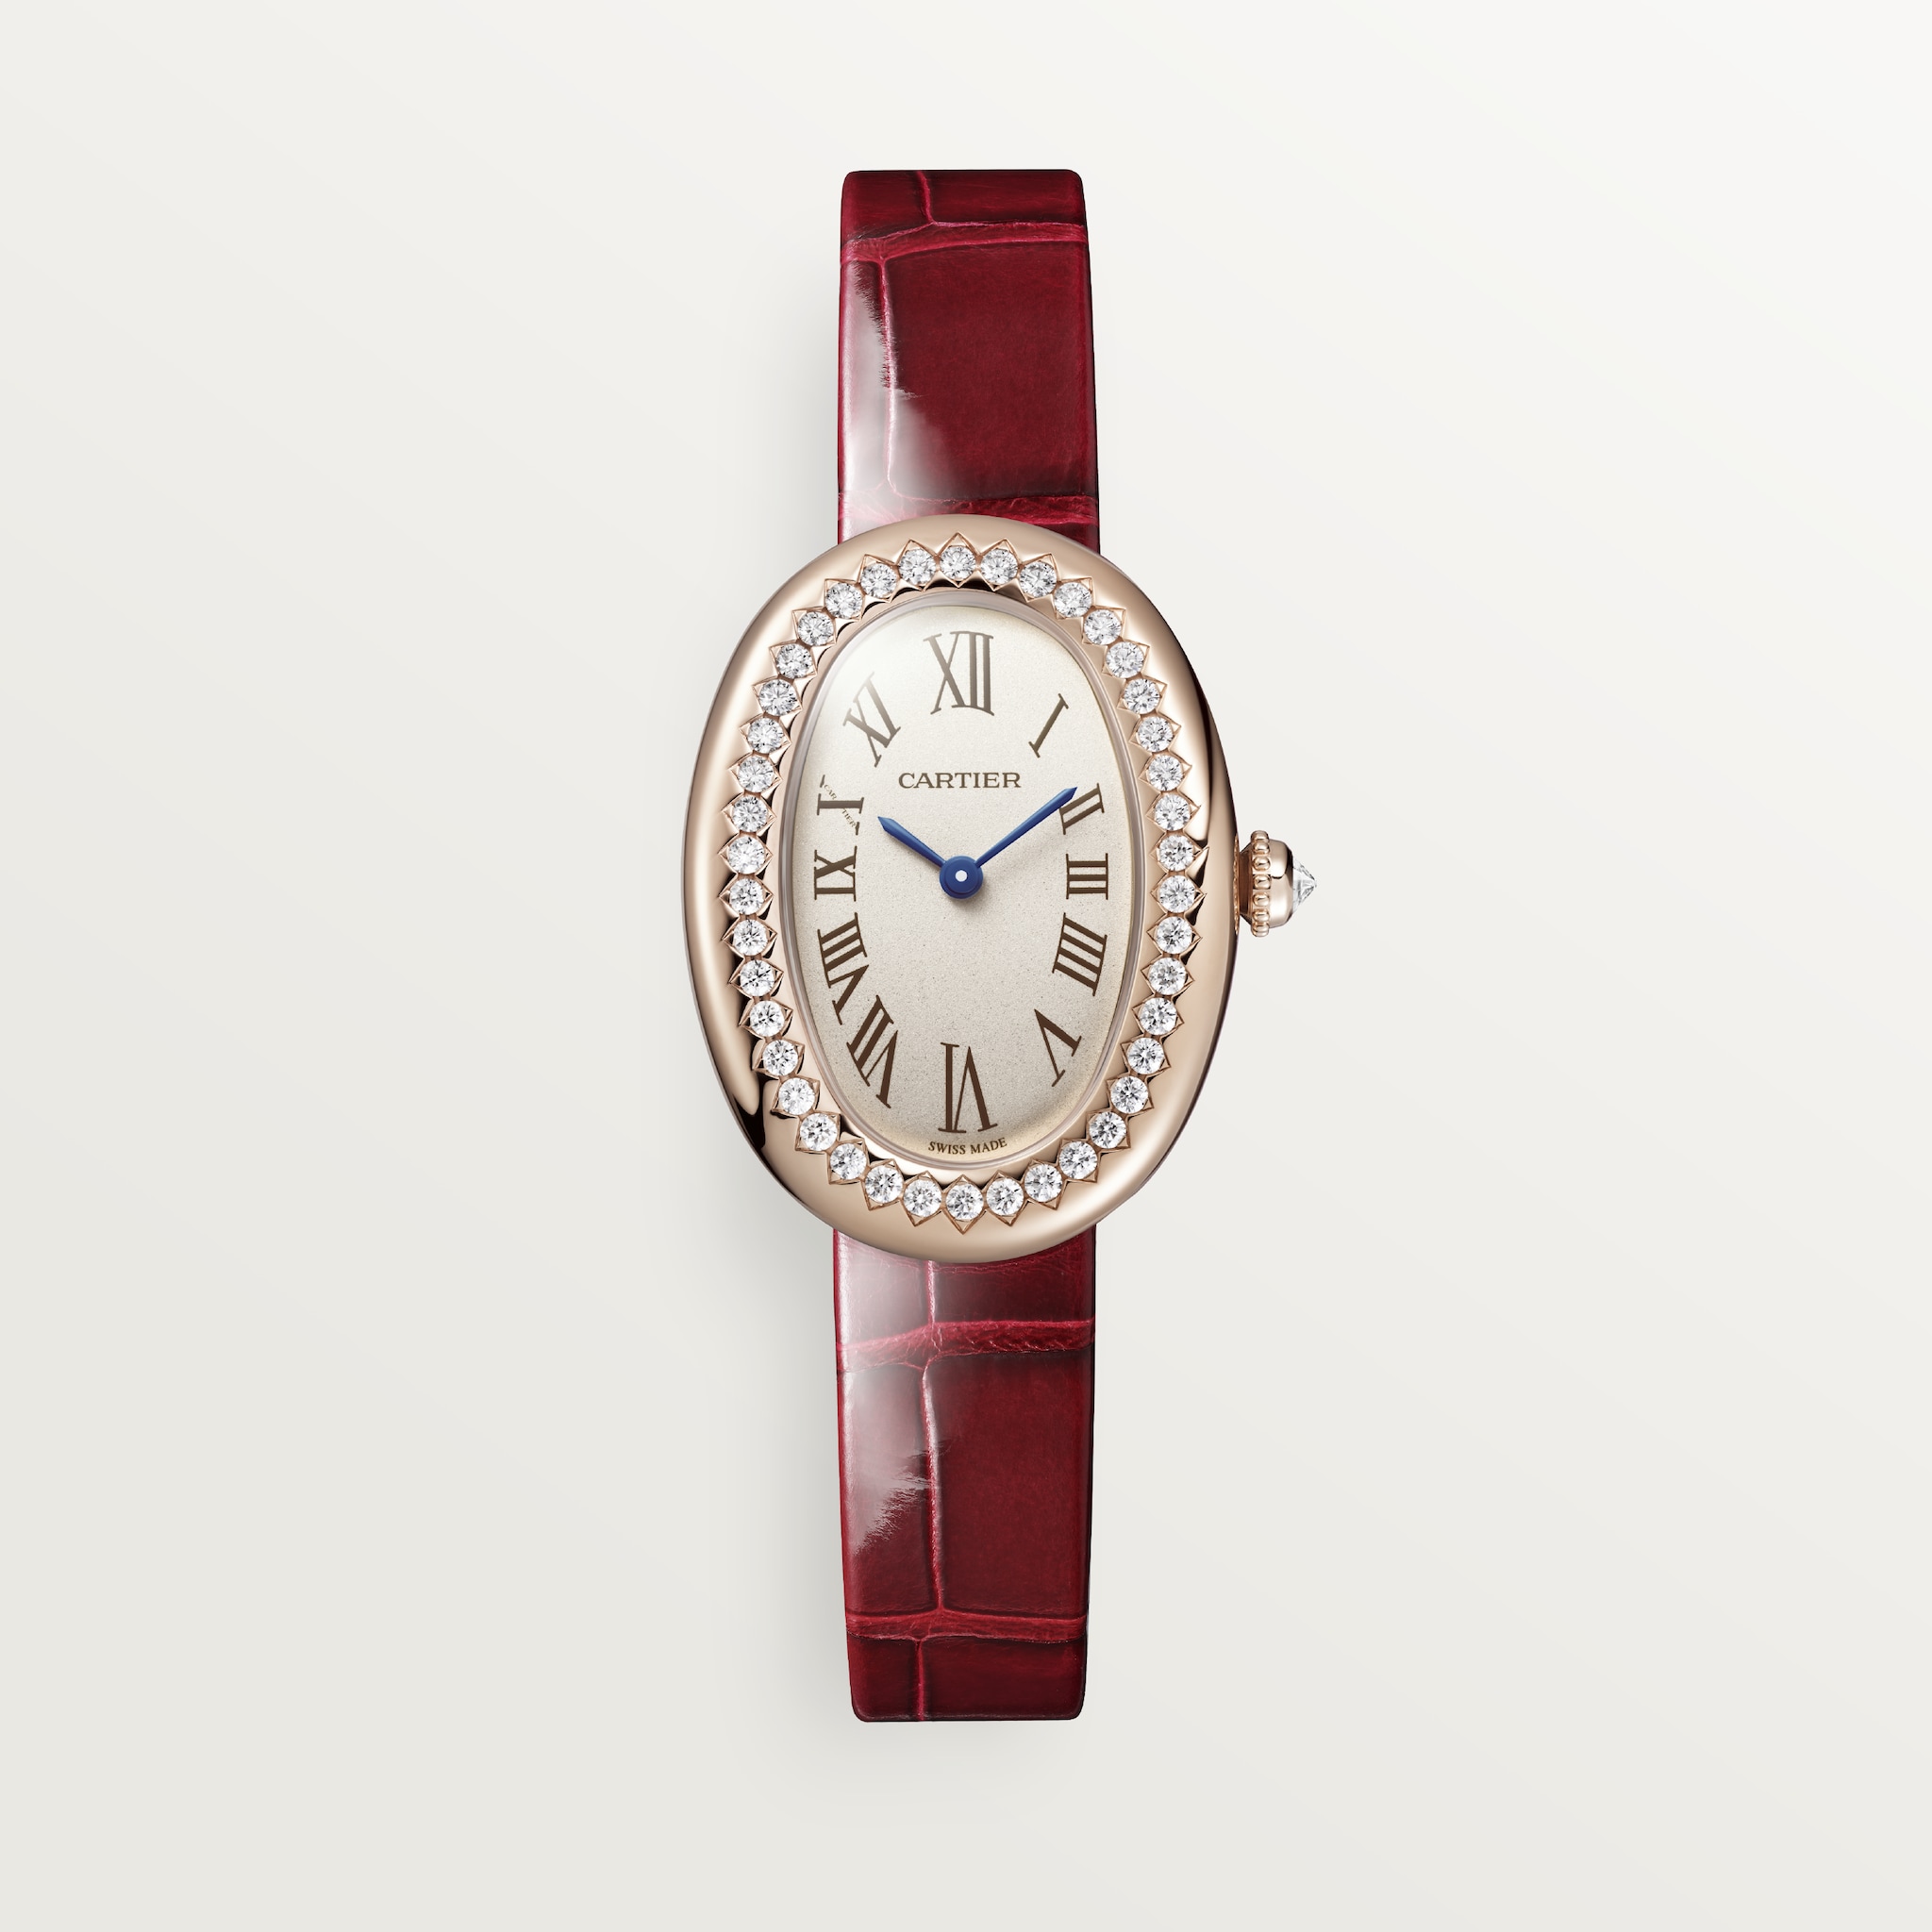 Baignoire watchSmall model, quartz movement, rose gold, diamonds, leather